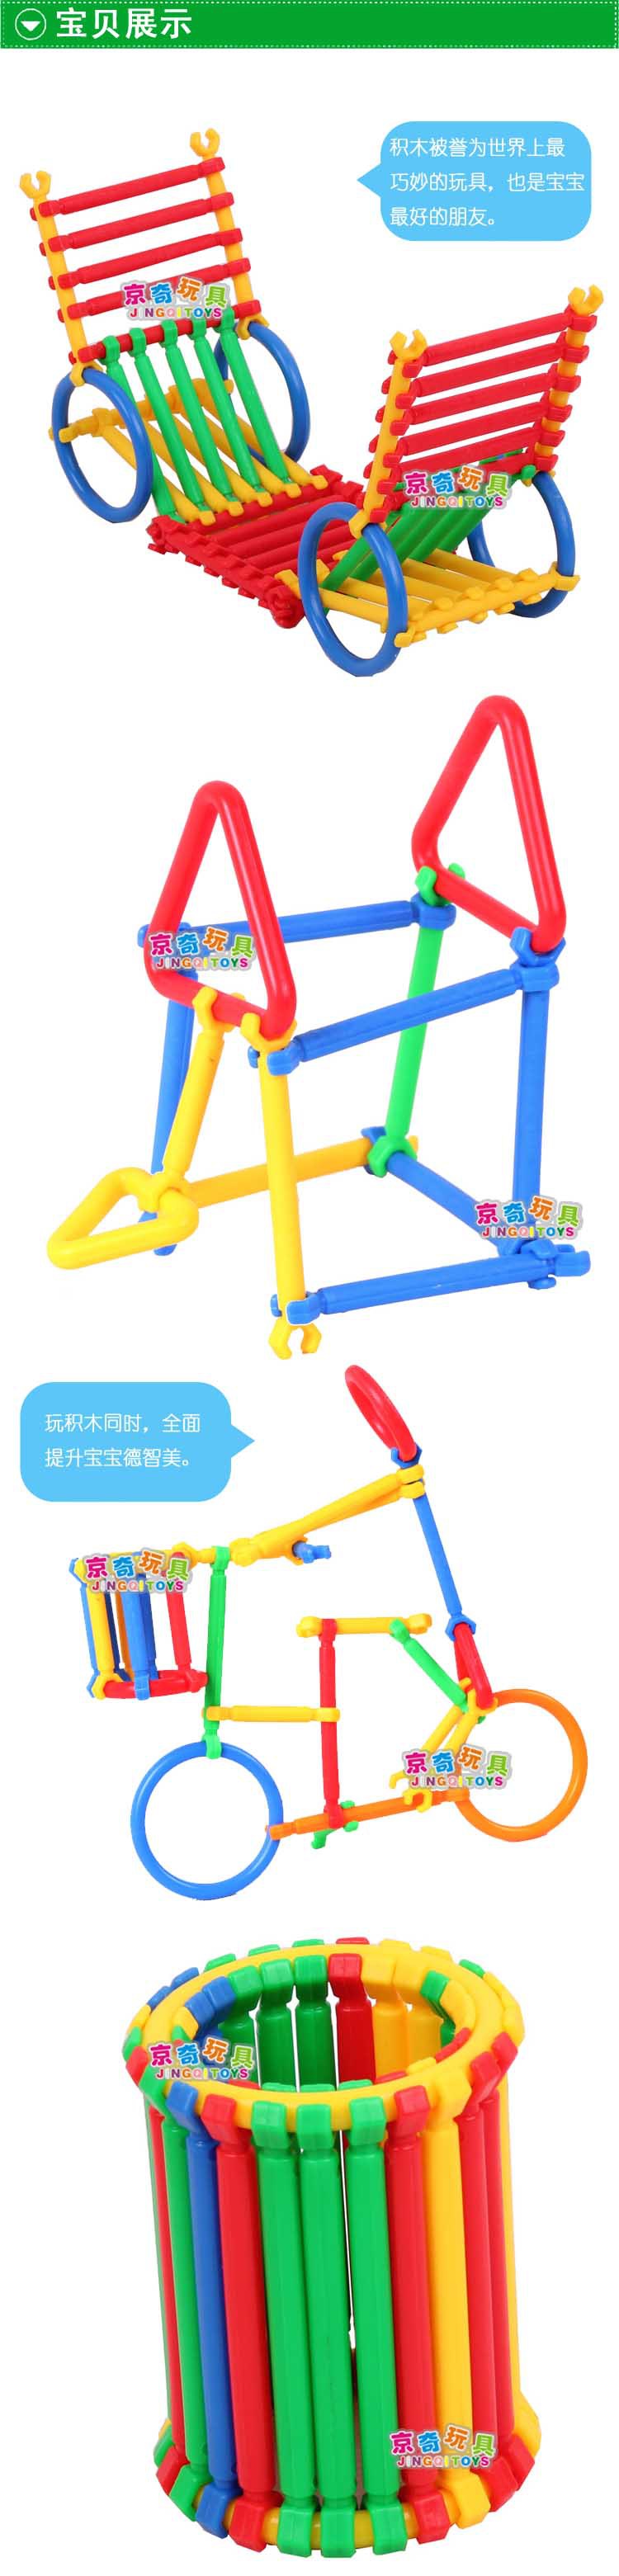 jq1073 聪明棒积木 益智拼搭 塑料环保 桌面儿童玩具 外贸出口